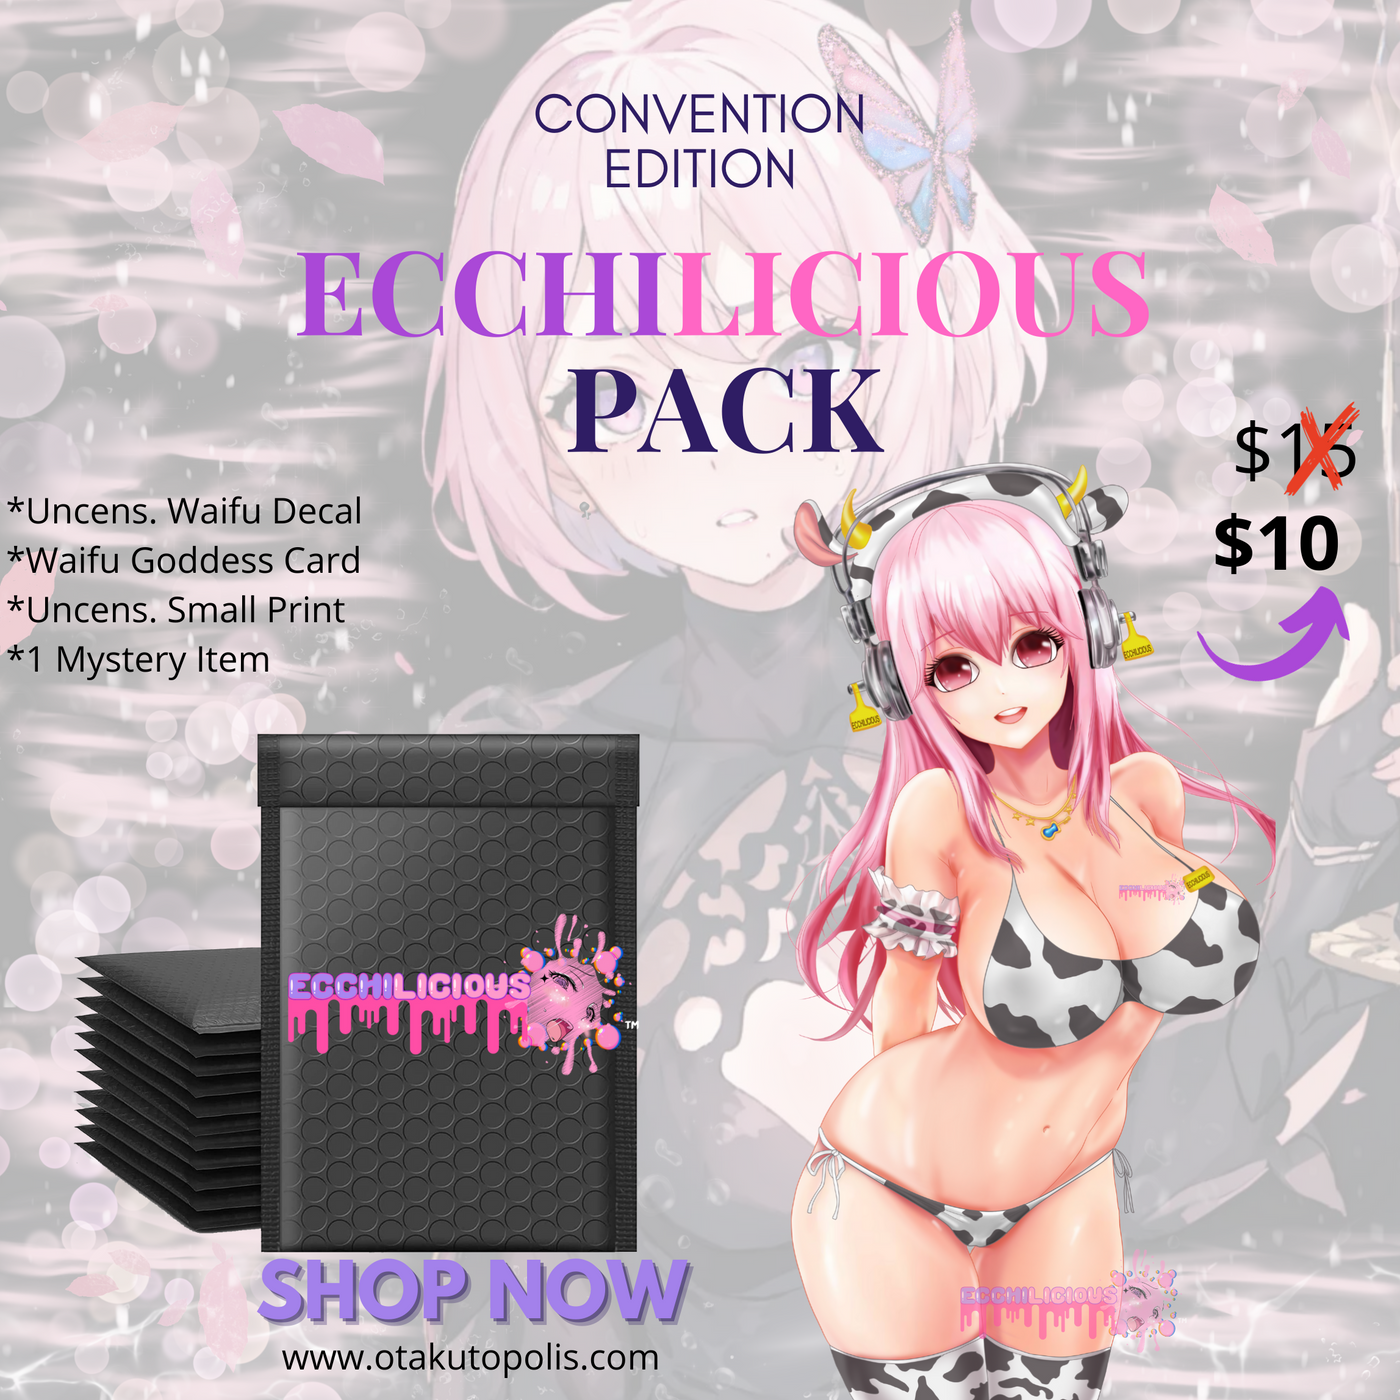 Ecchilicious Pack - Convention Edition